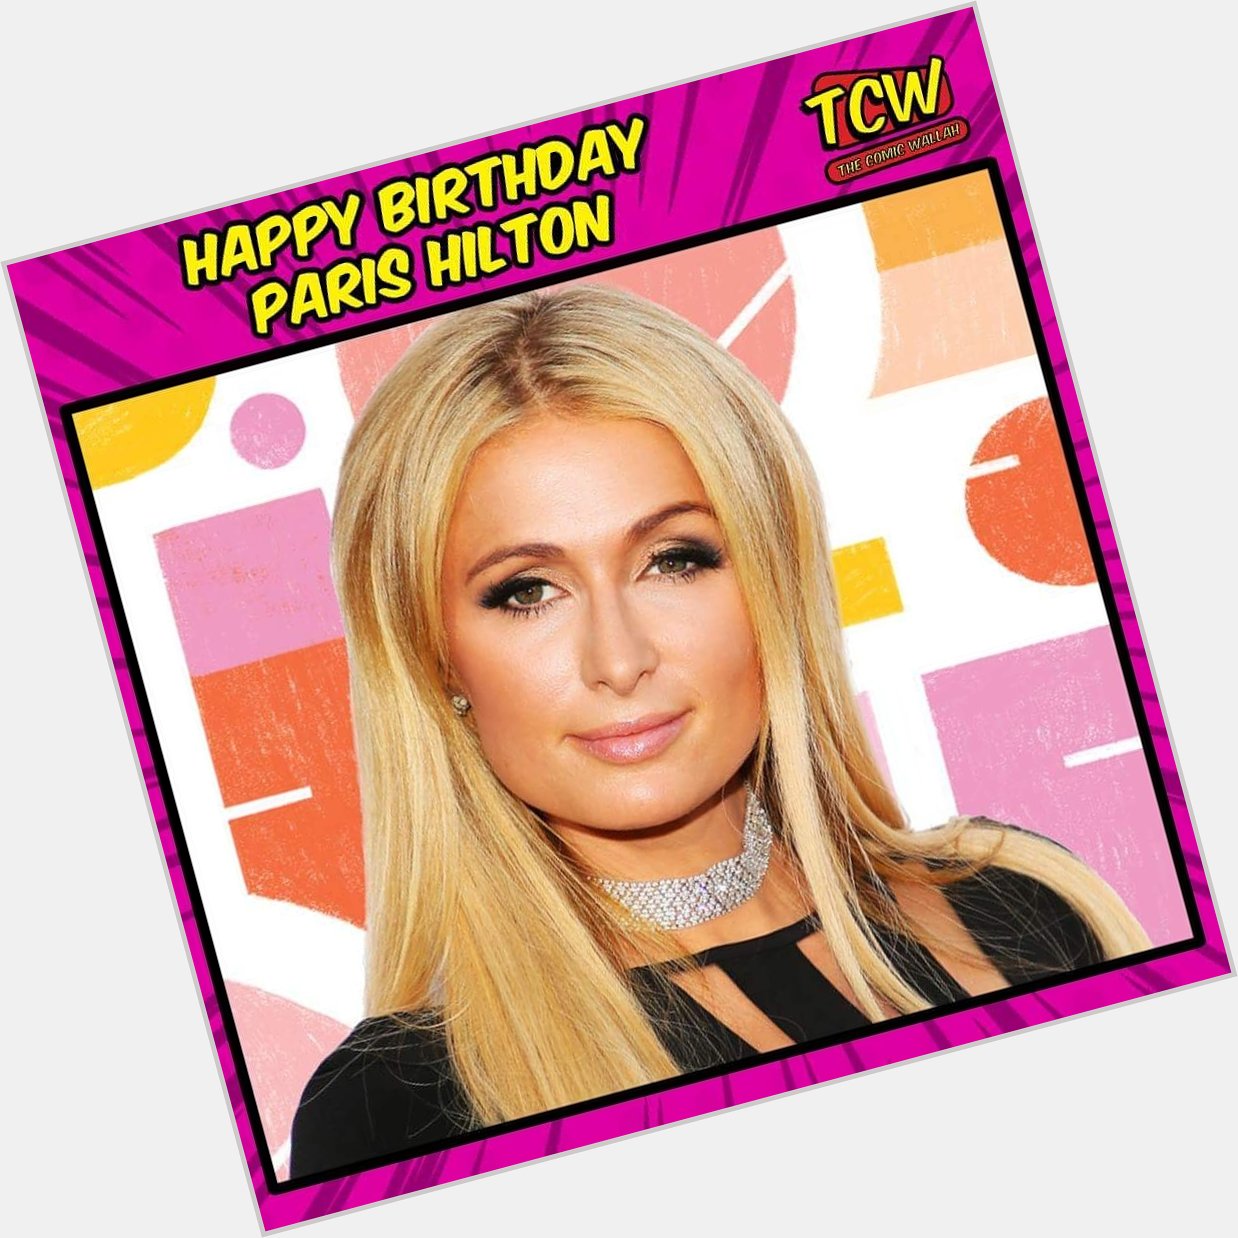 Wishing the gorgeous Paris Hilton a very happy birthday. 